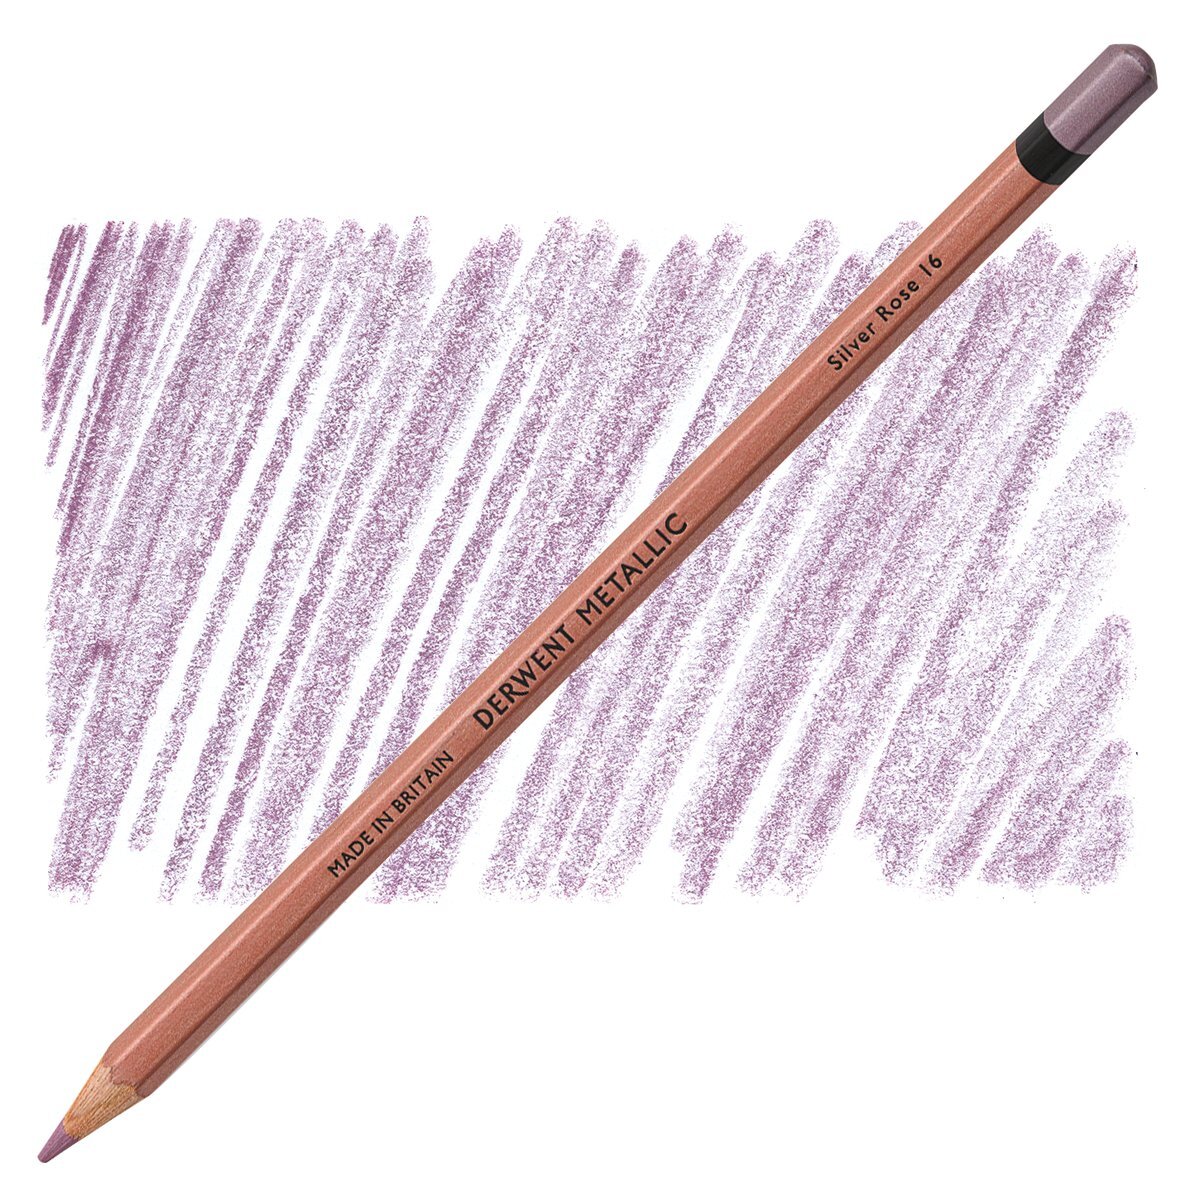 WDEC Metallic Pencils, Metallic Markers,10 Luminous Colors